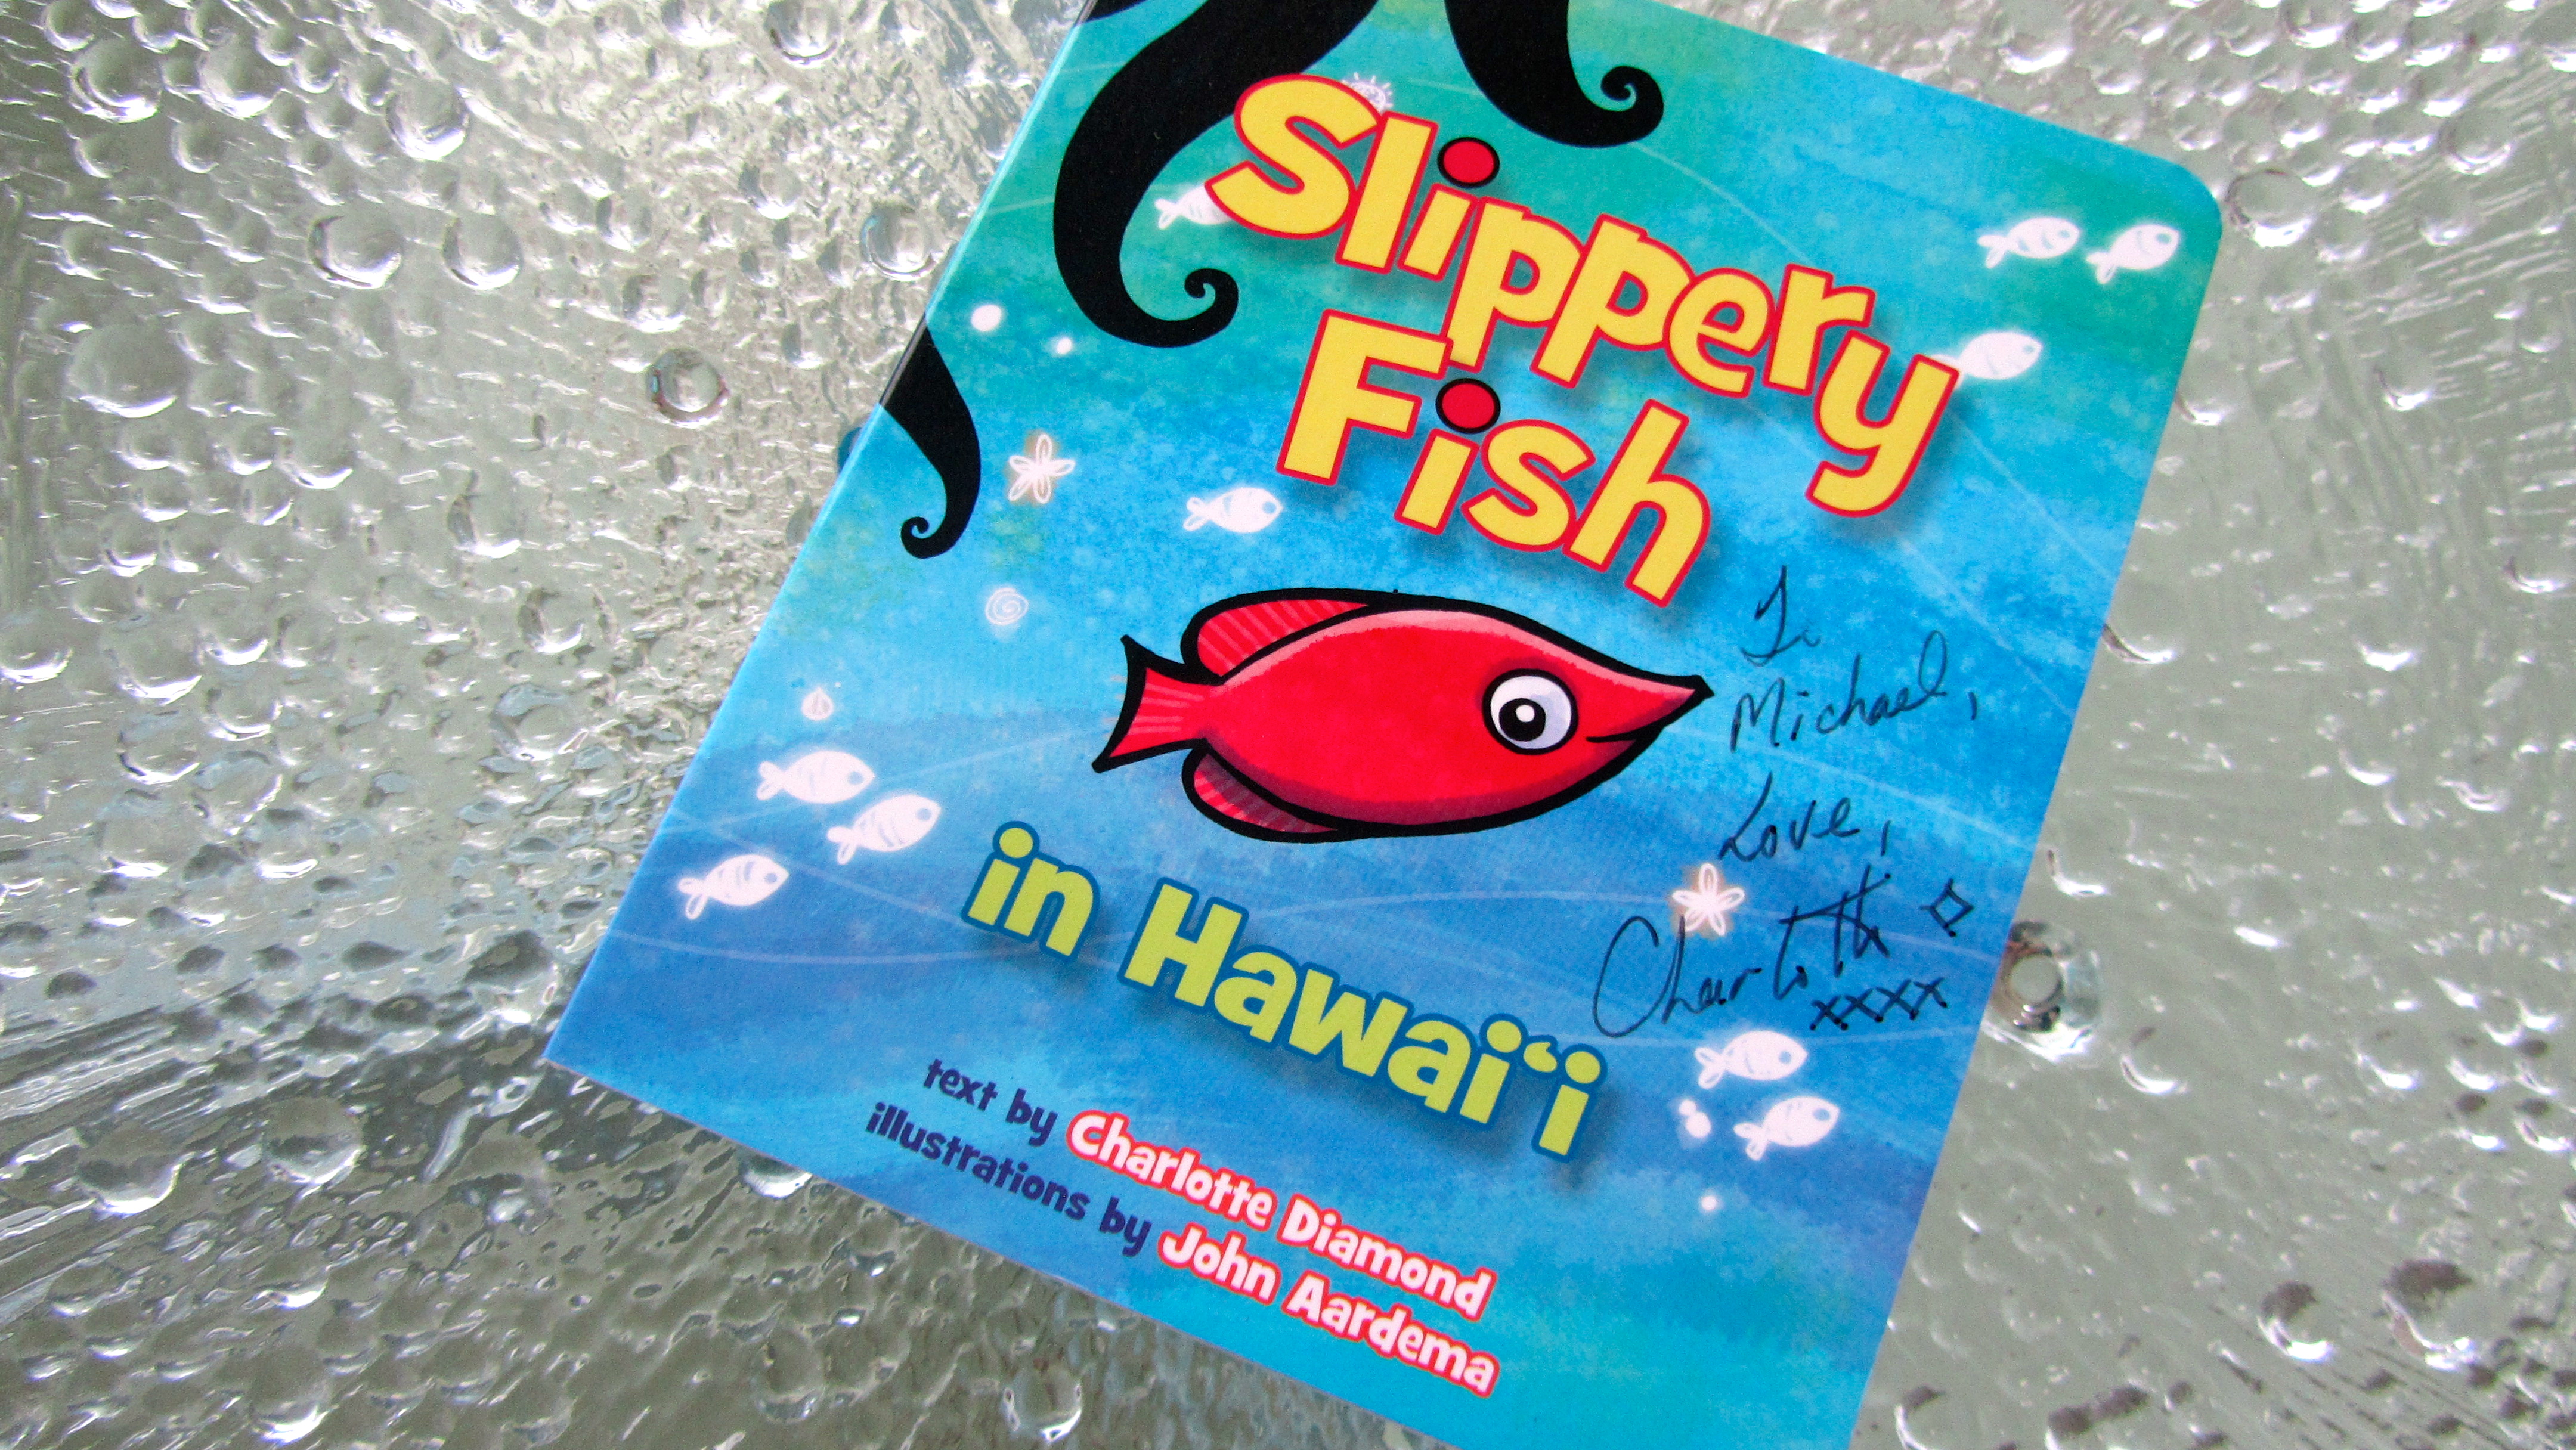 Slippery Fish in Hawaii